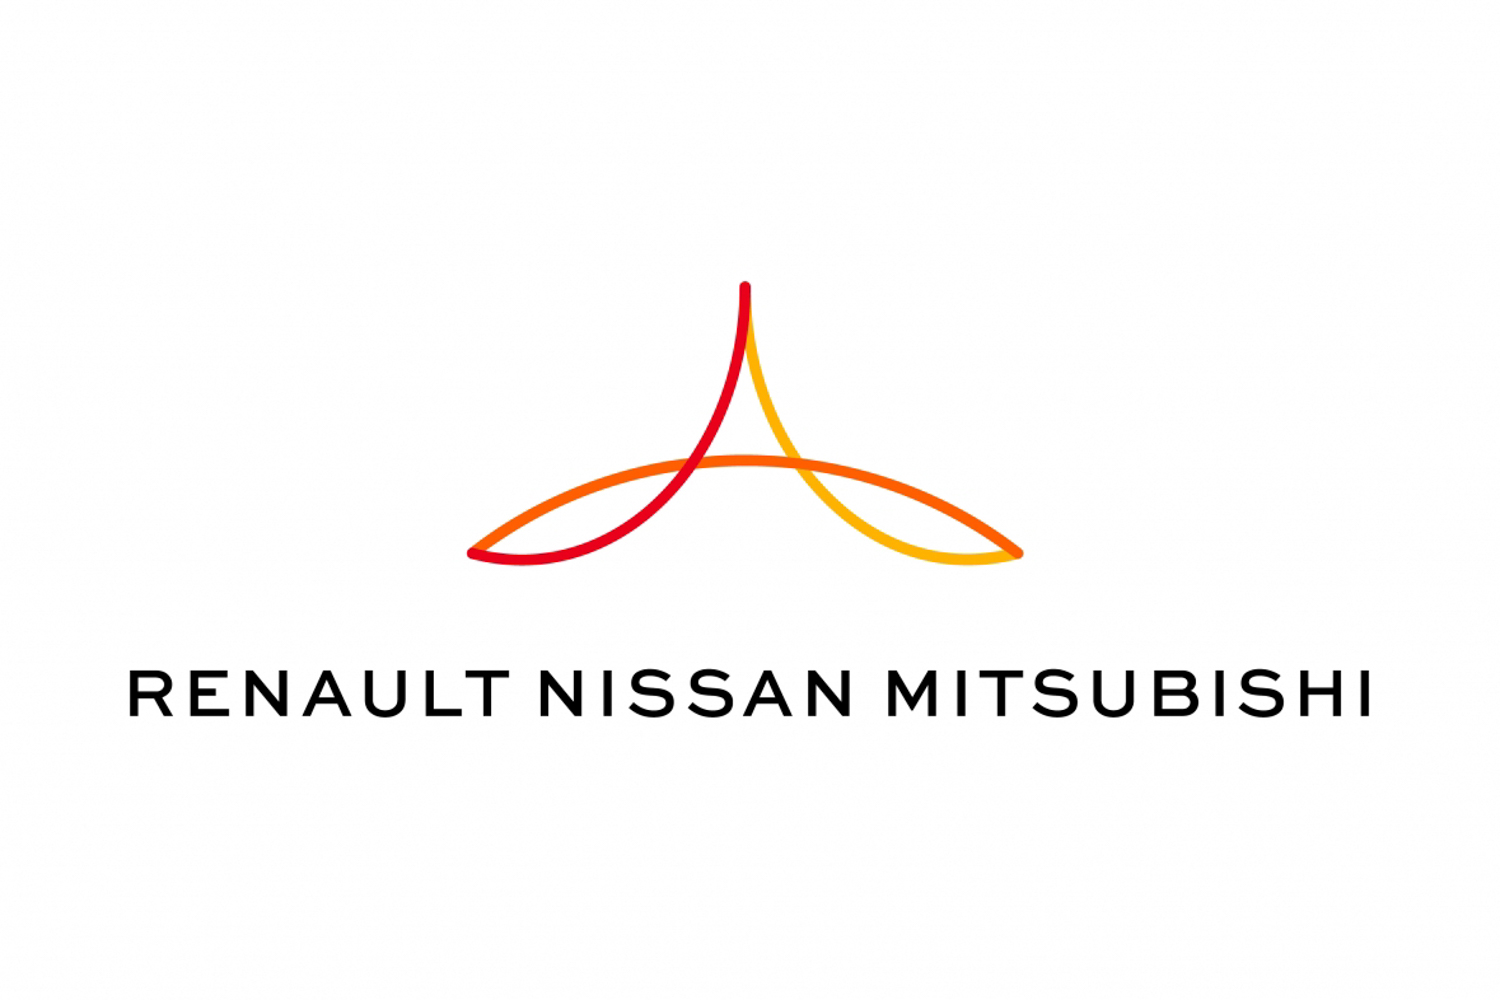 Car Industry News | Renault-Nissan-Mitsubishi Alliance future roadmap | CompleteCar.ie